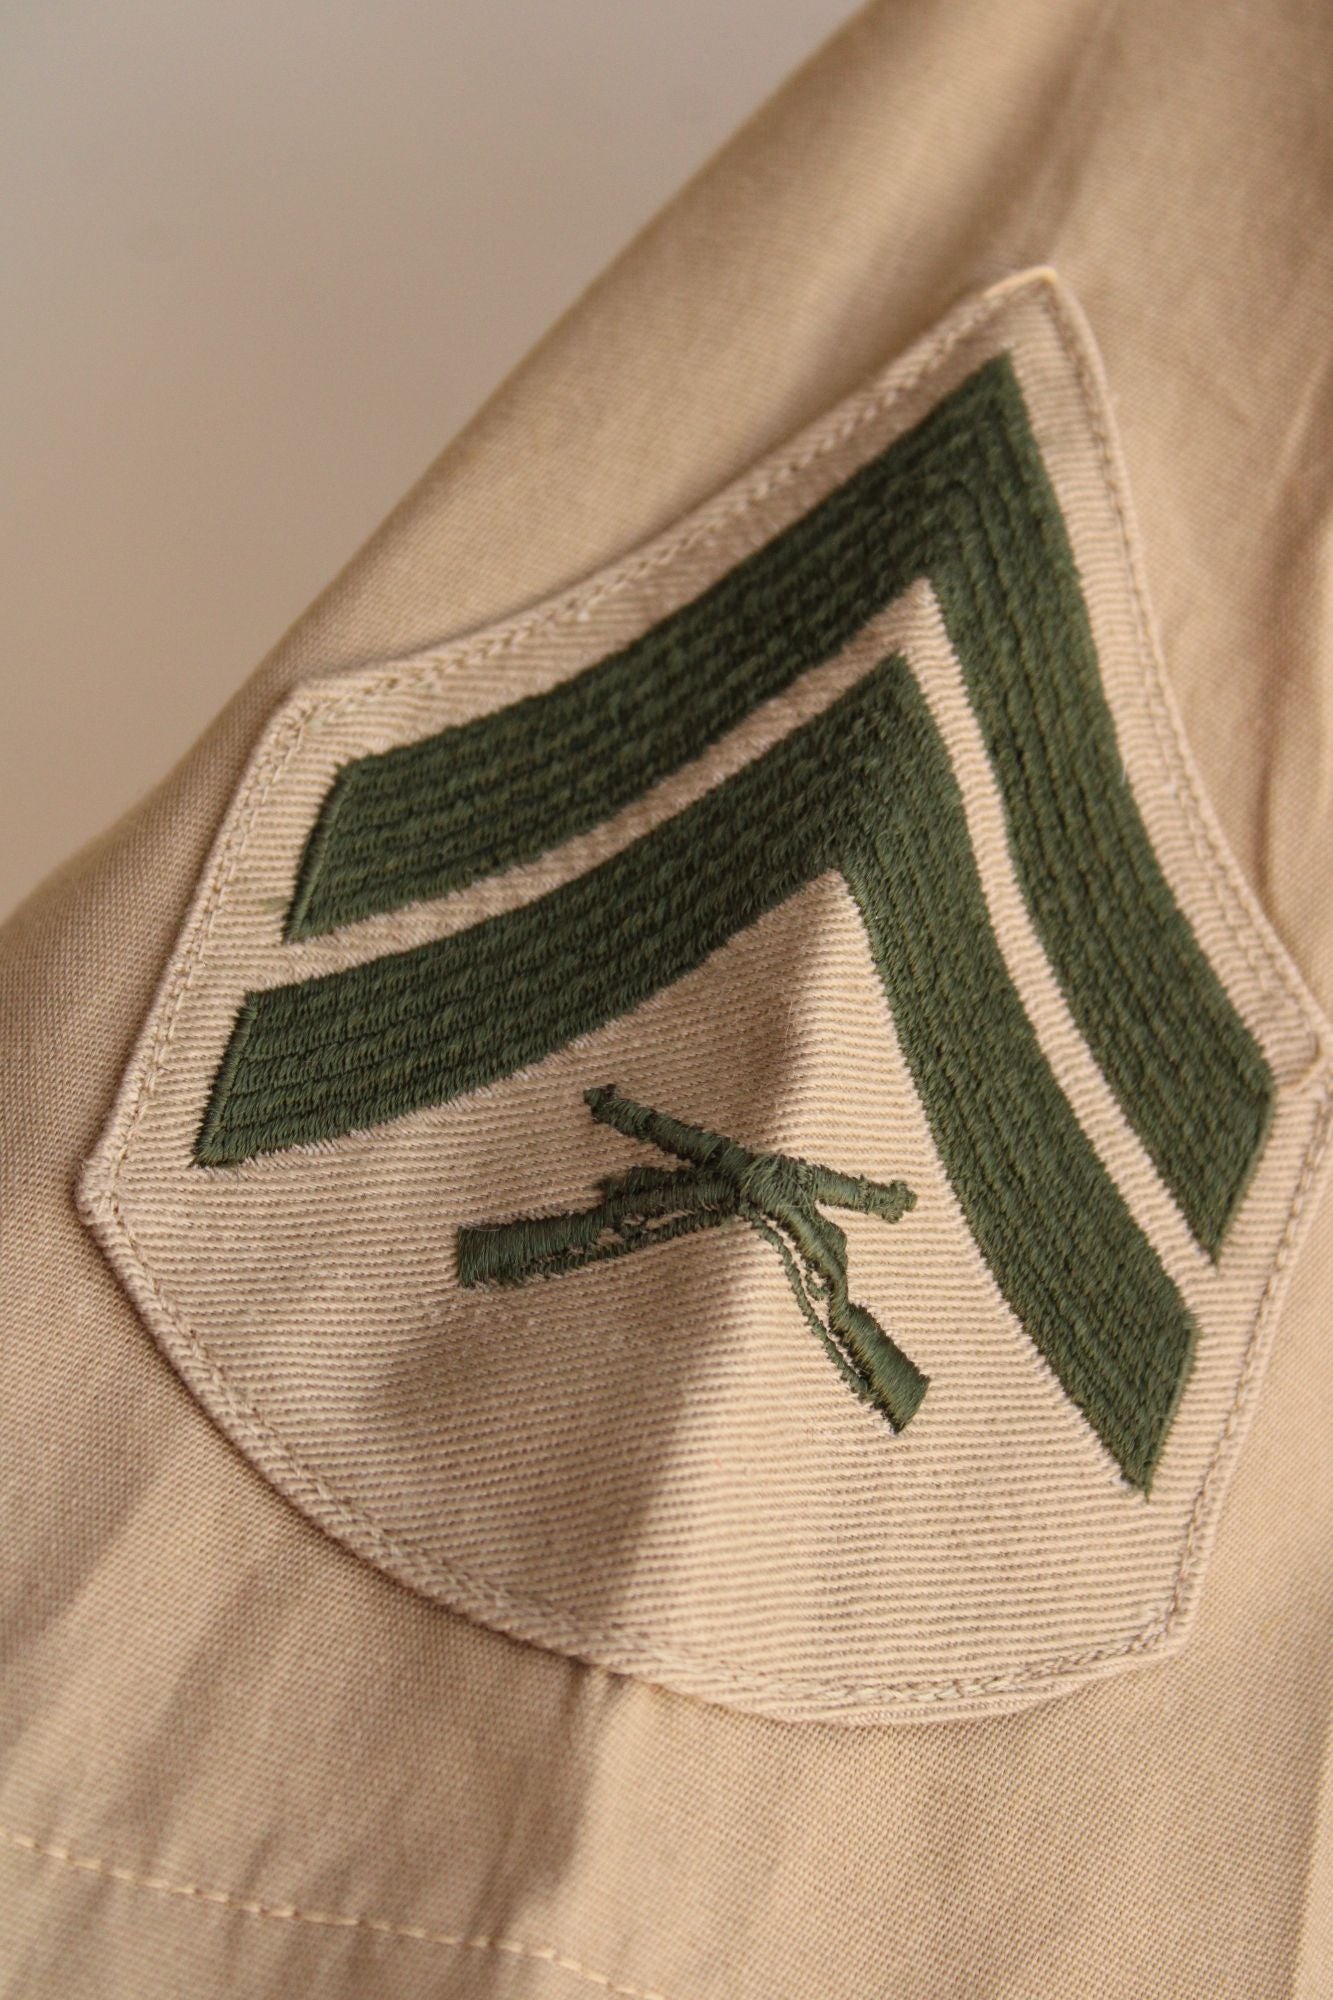 US Marine Unisex Uniform Shirt, With Rank Patches, Corporal, Khaki, 43" chest